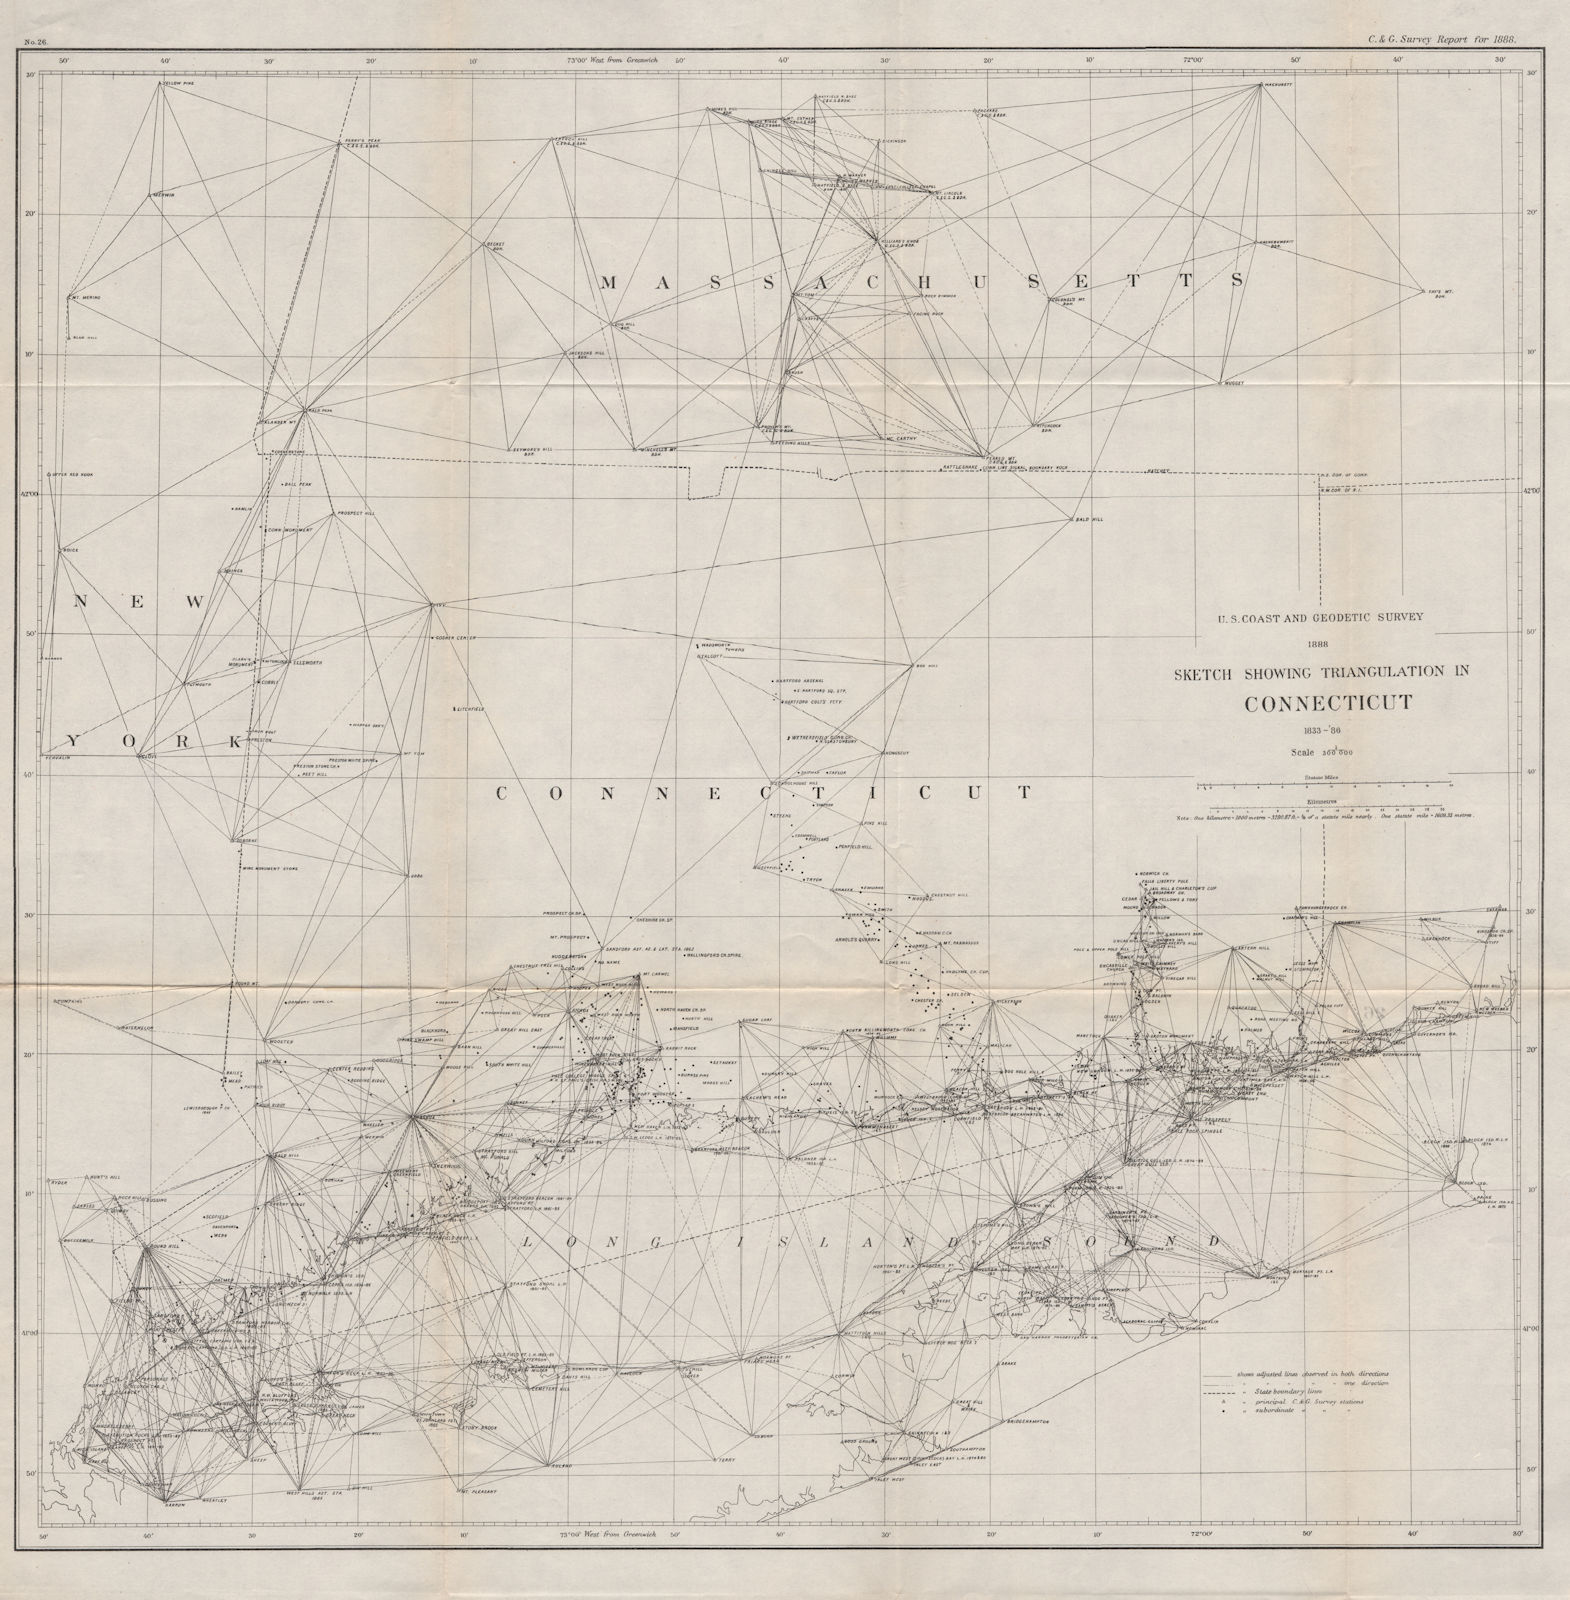 CONNECTICUT COASTAL SURVEY. Long Island Sound. Triangulation. USCGS 1889 map